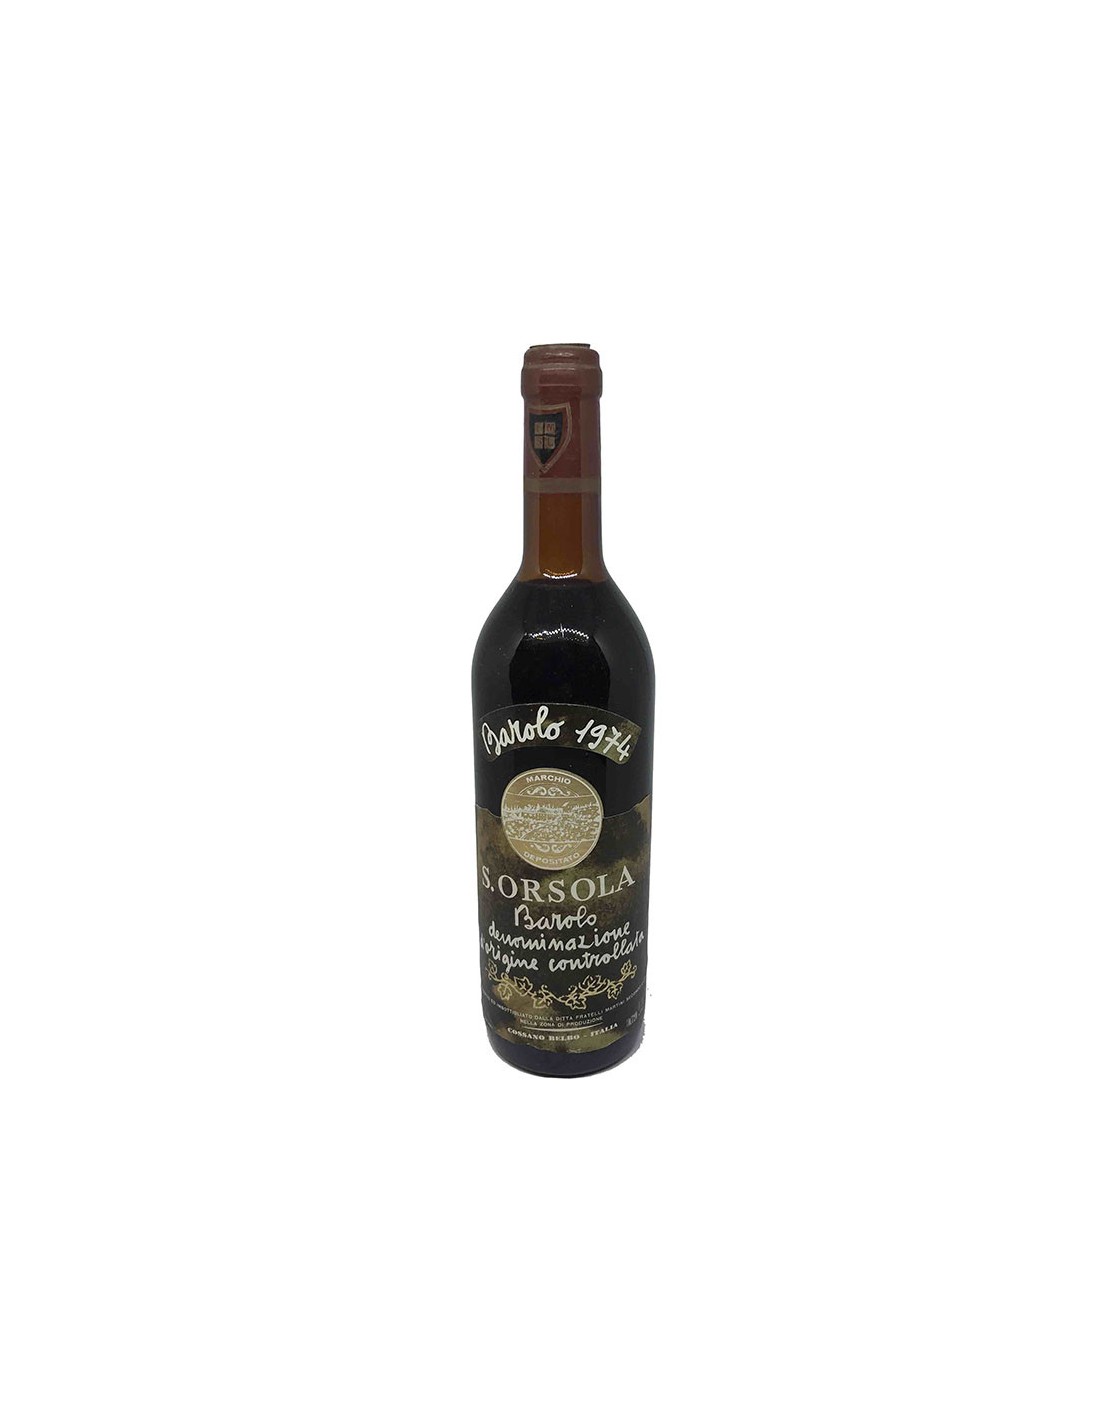 BAROLO 1974 S.ORSOLA Grandi Bottiglie